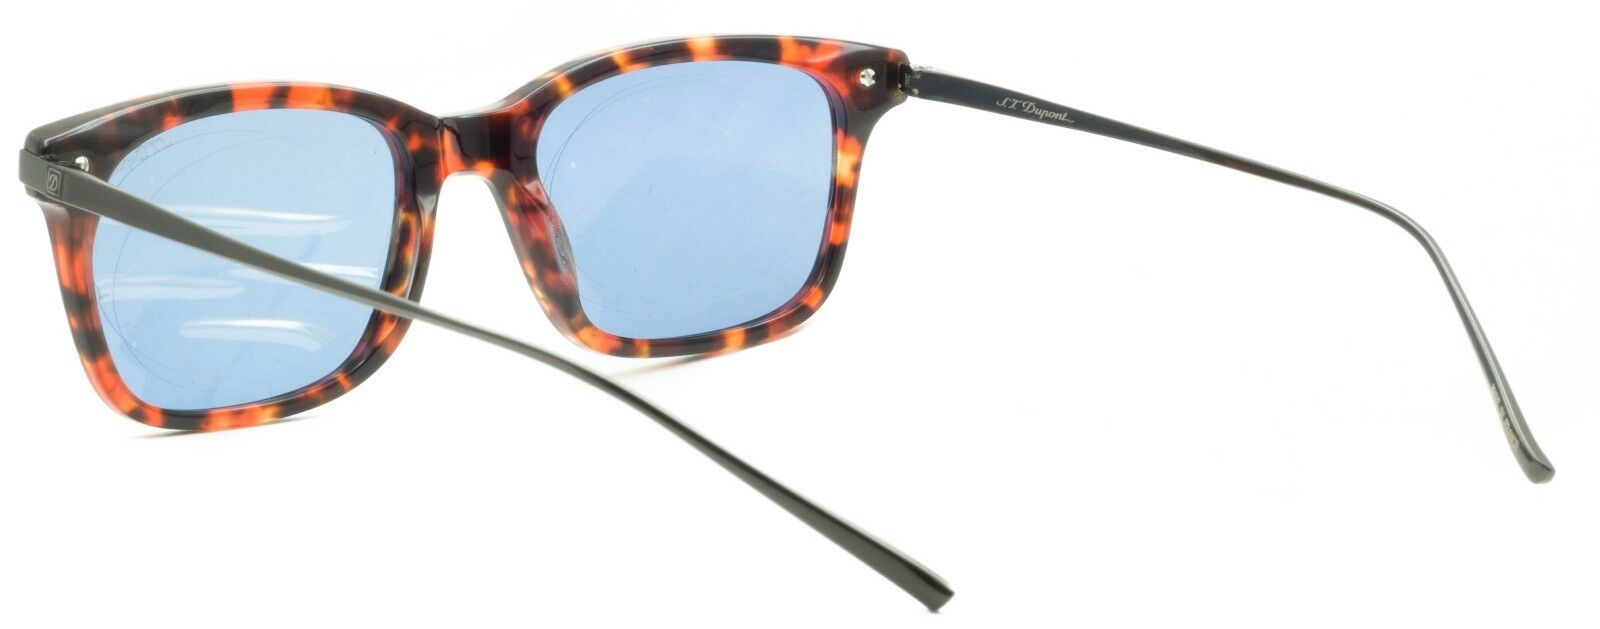 ST DUPONT ST042 C3 Wayfarer Shades Eyewear FRAMES Sunglasses New BNIB - France